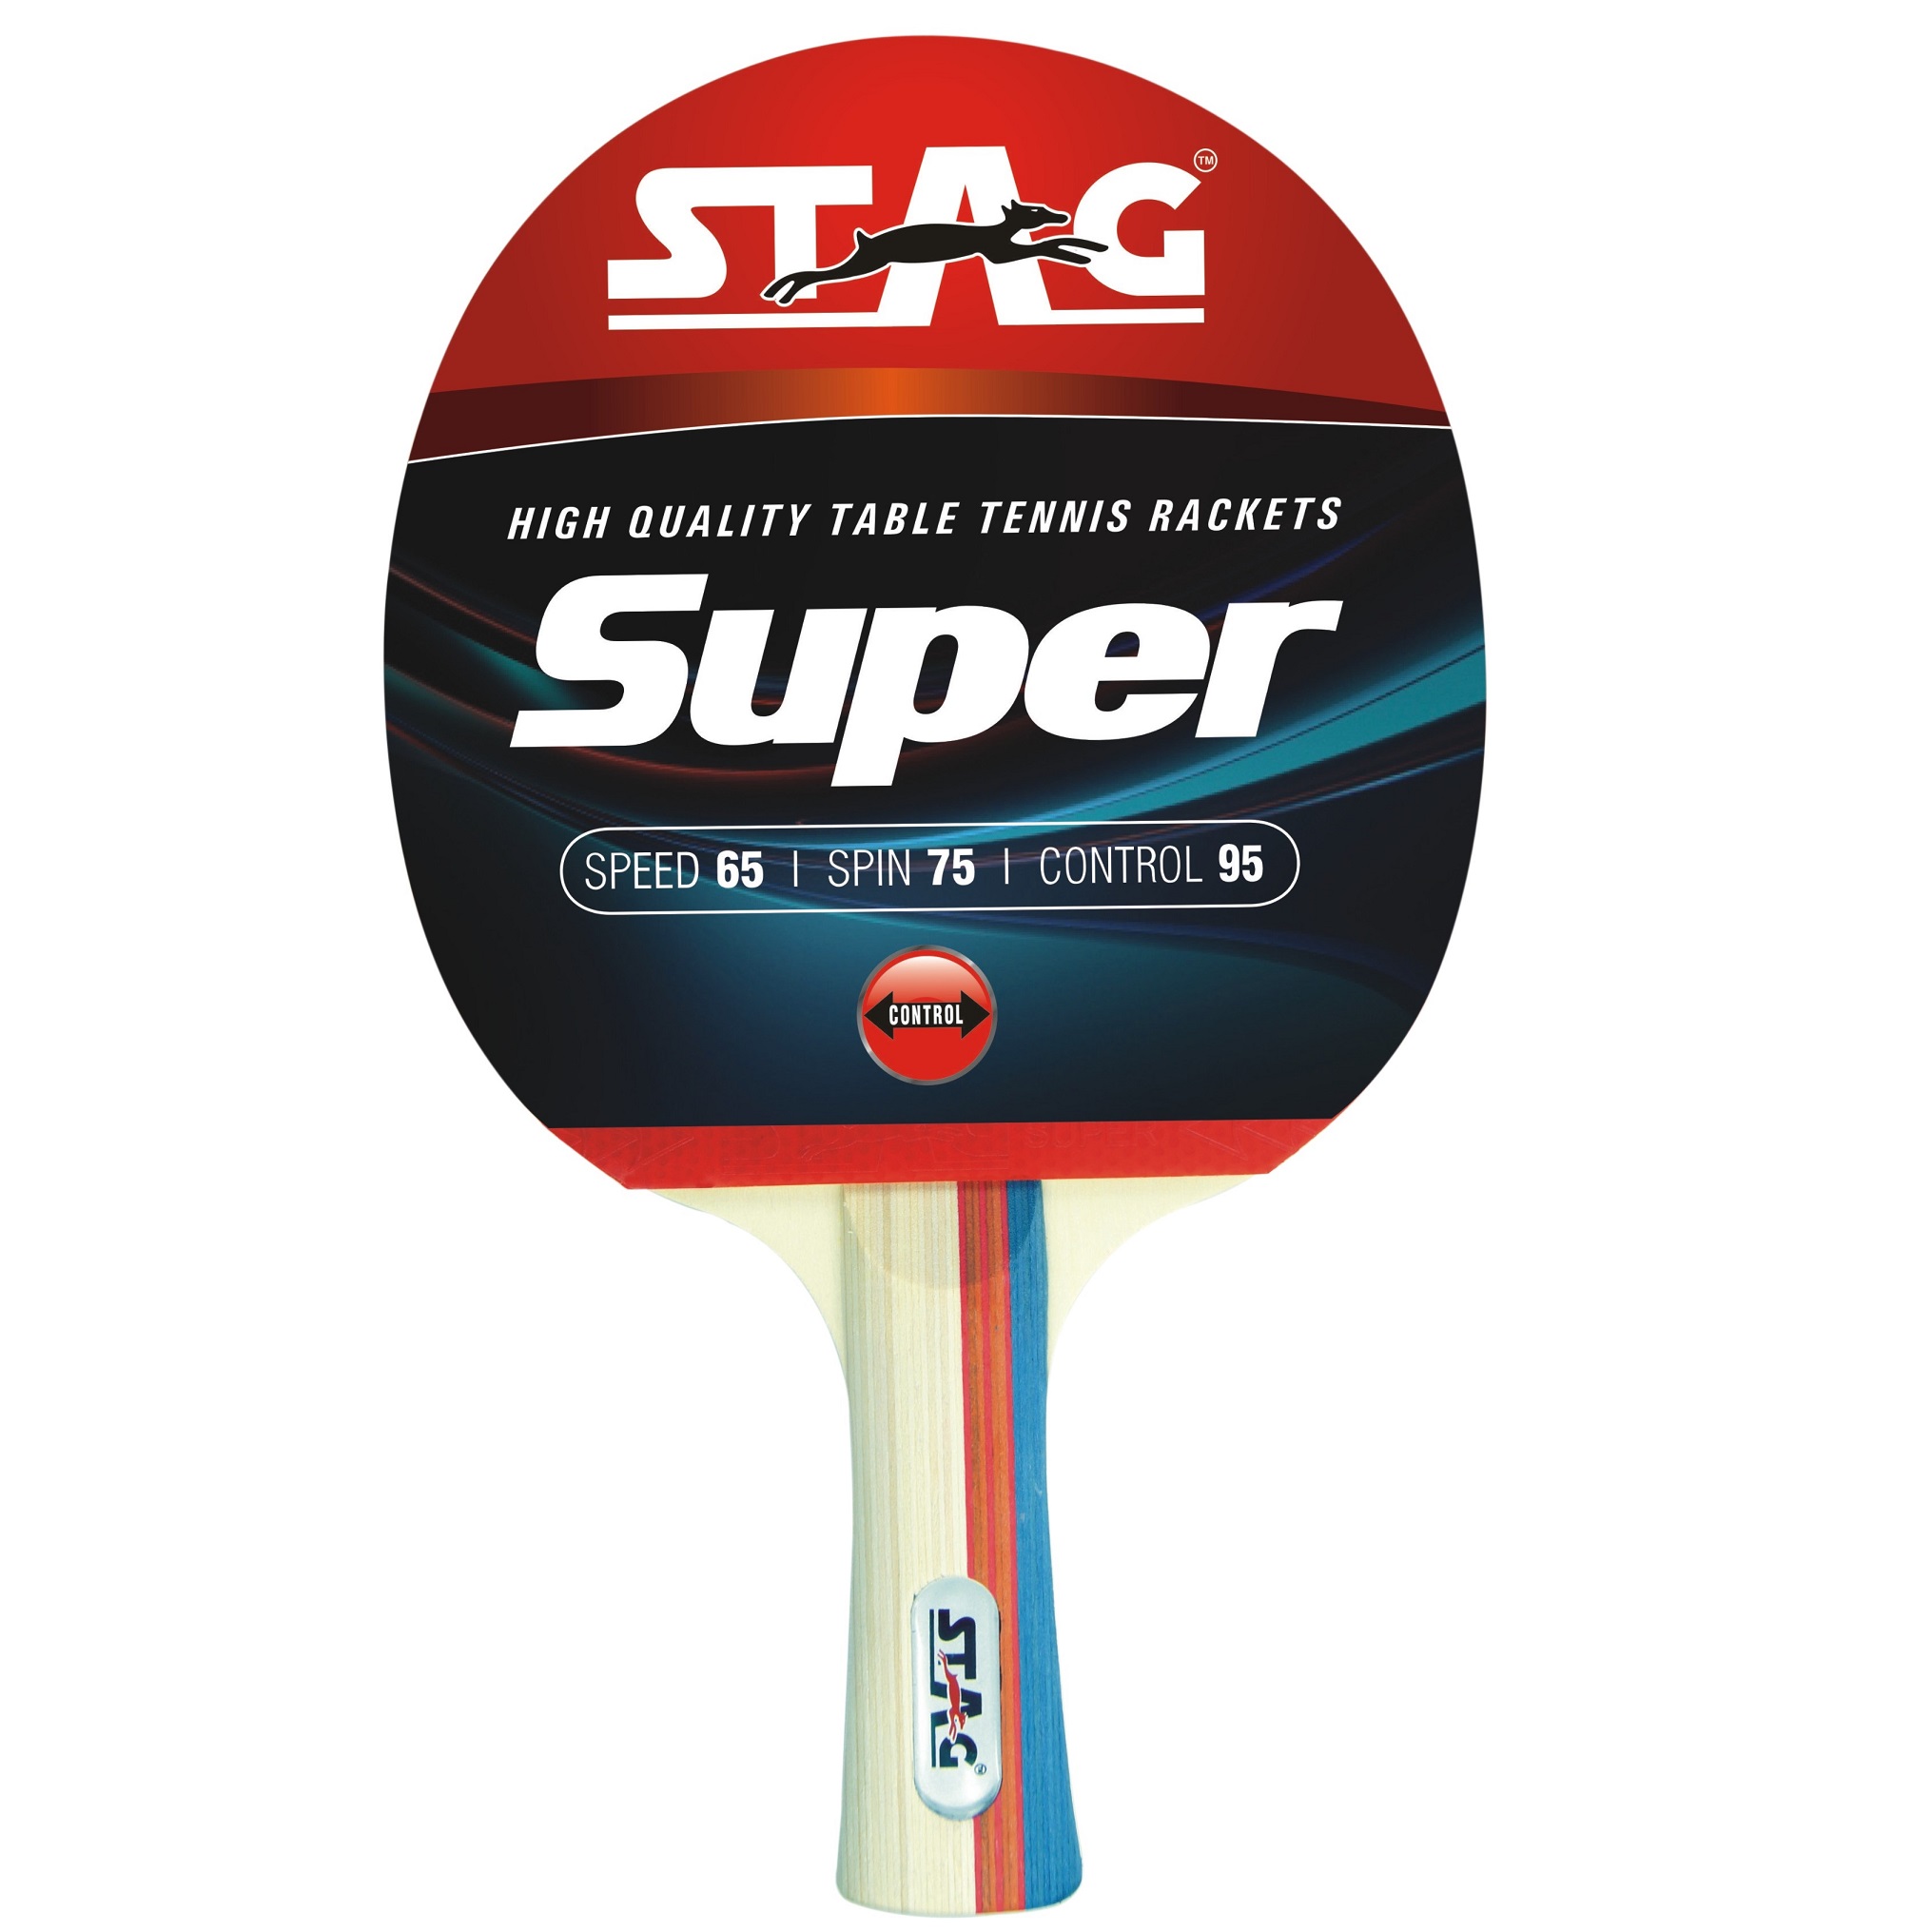     Stag Racket Super